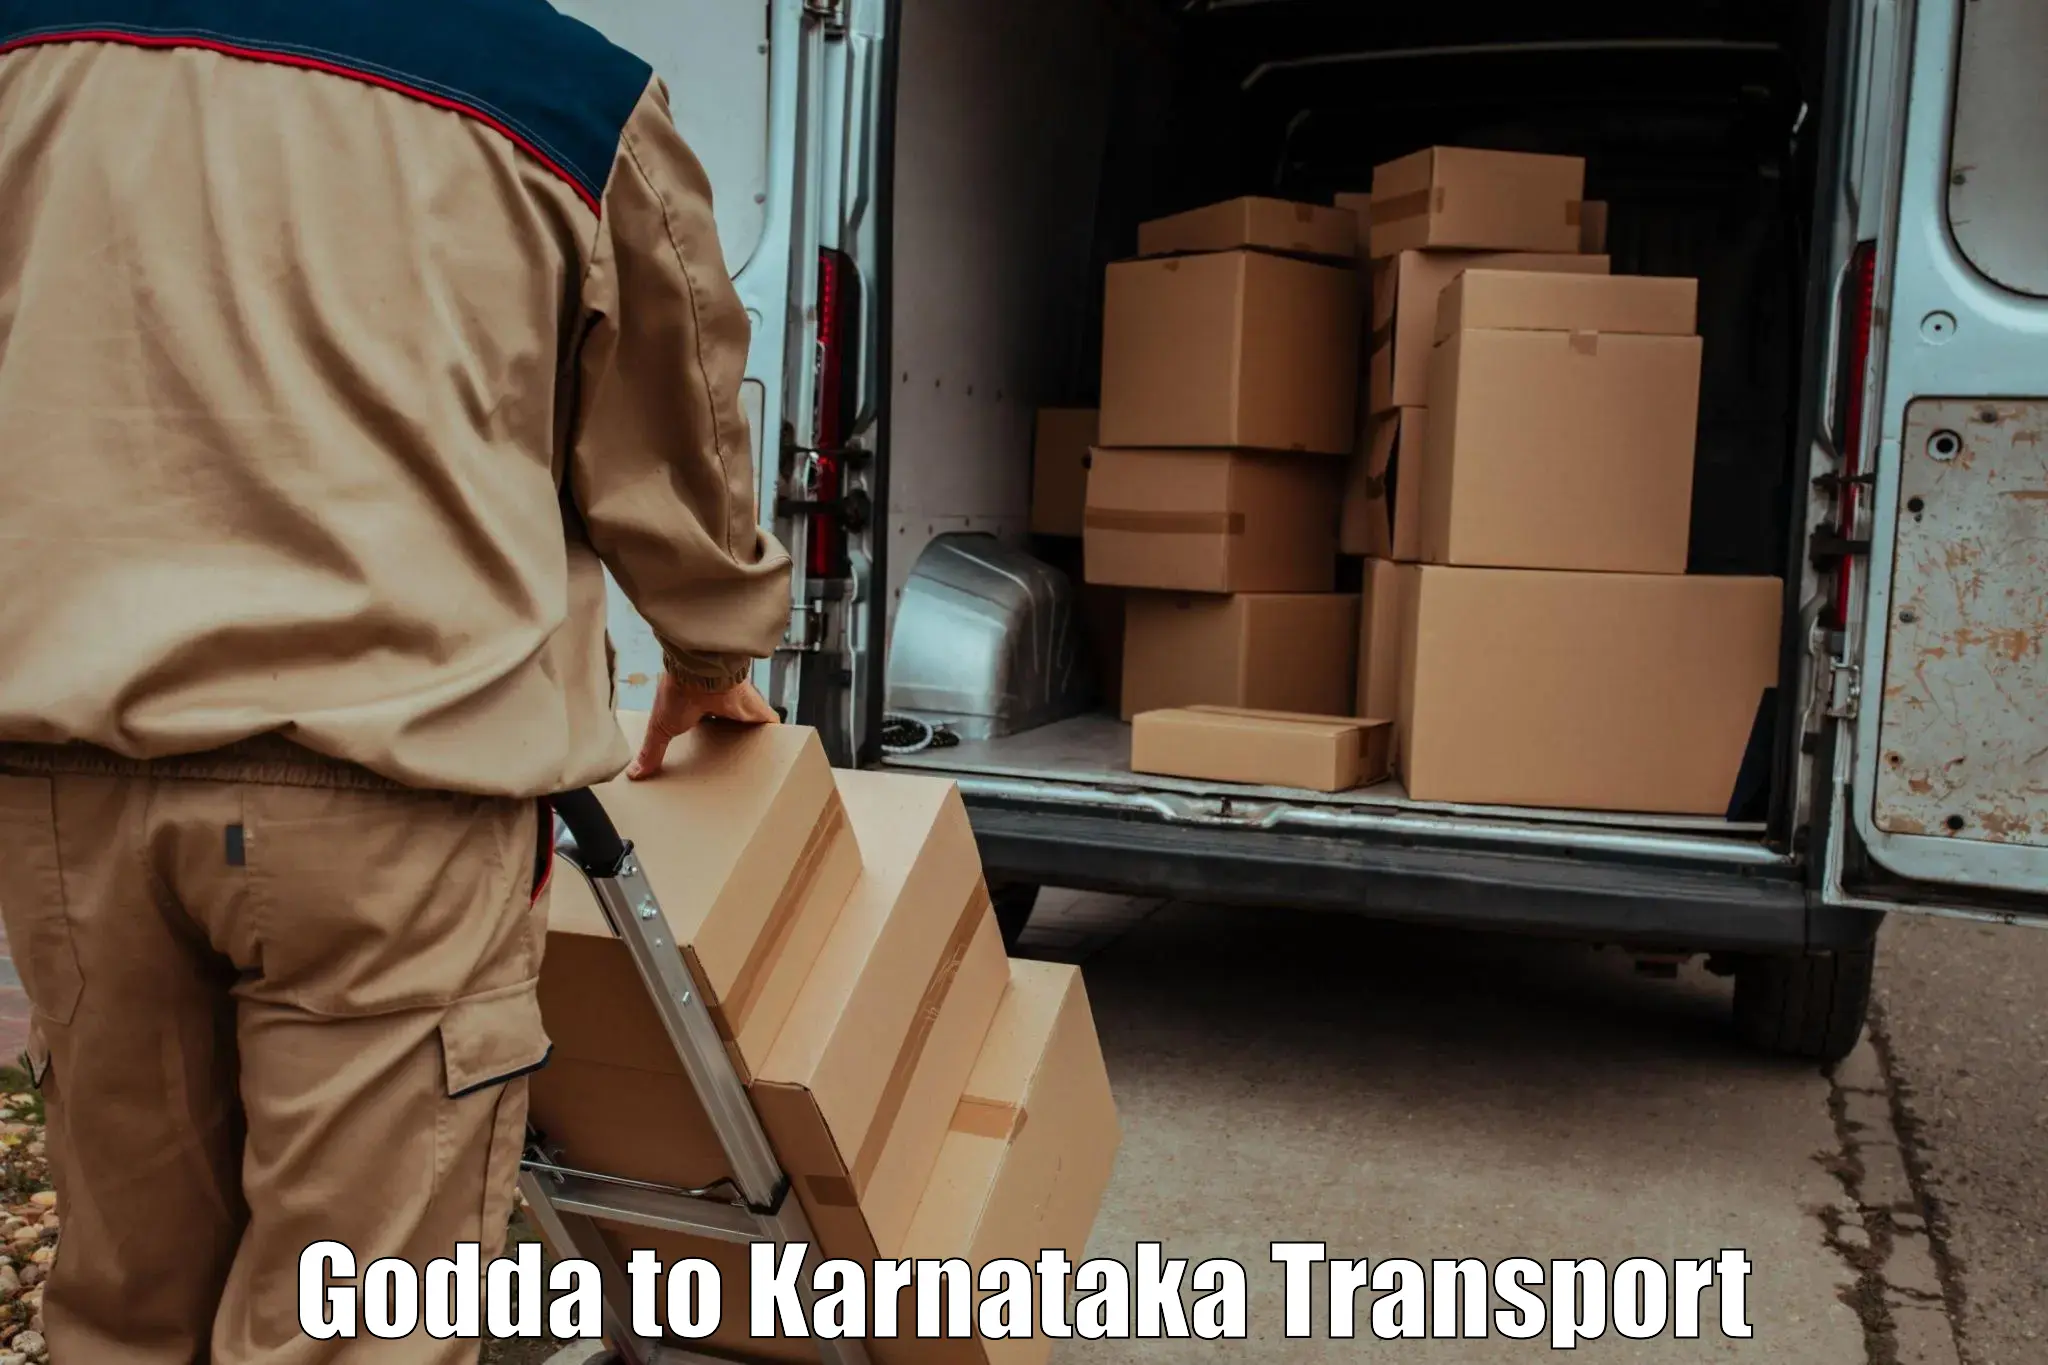 Delivery service Godda to Deodurga